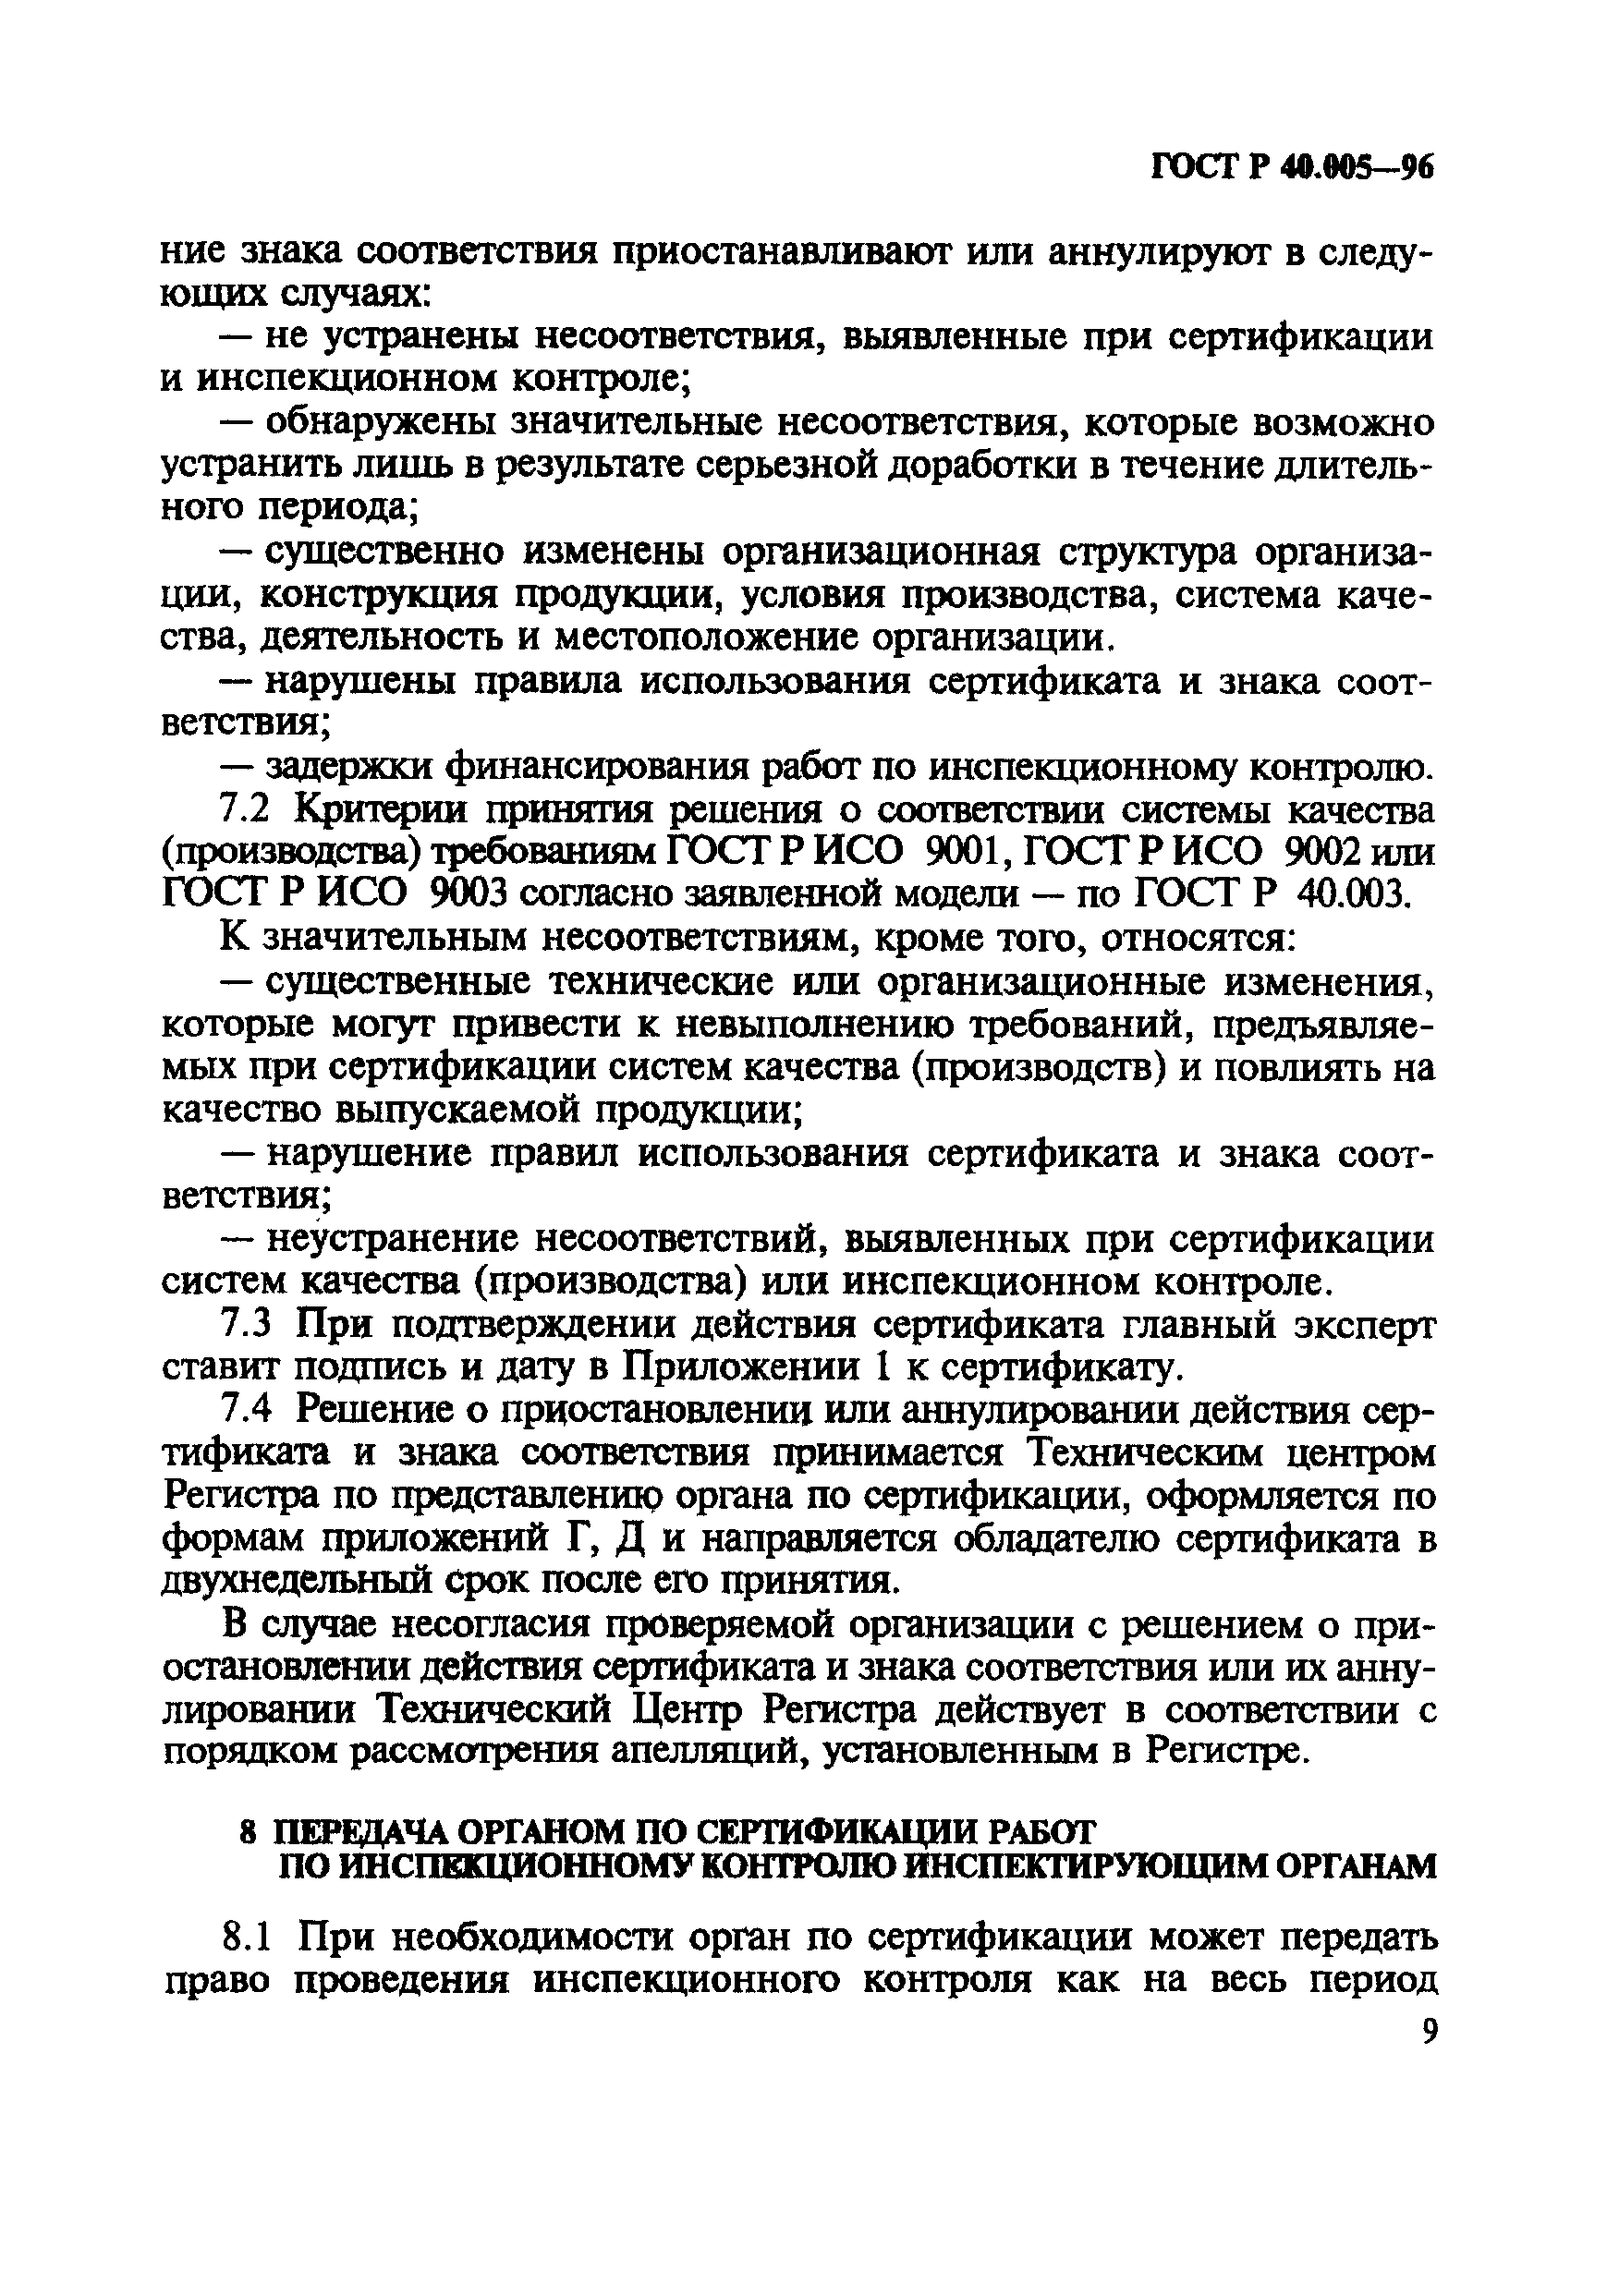 ГОСТ Р 40.005-96